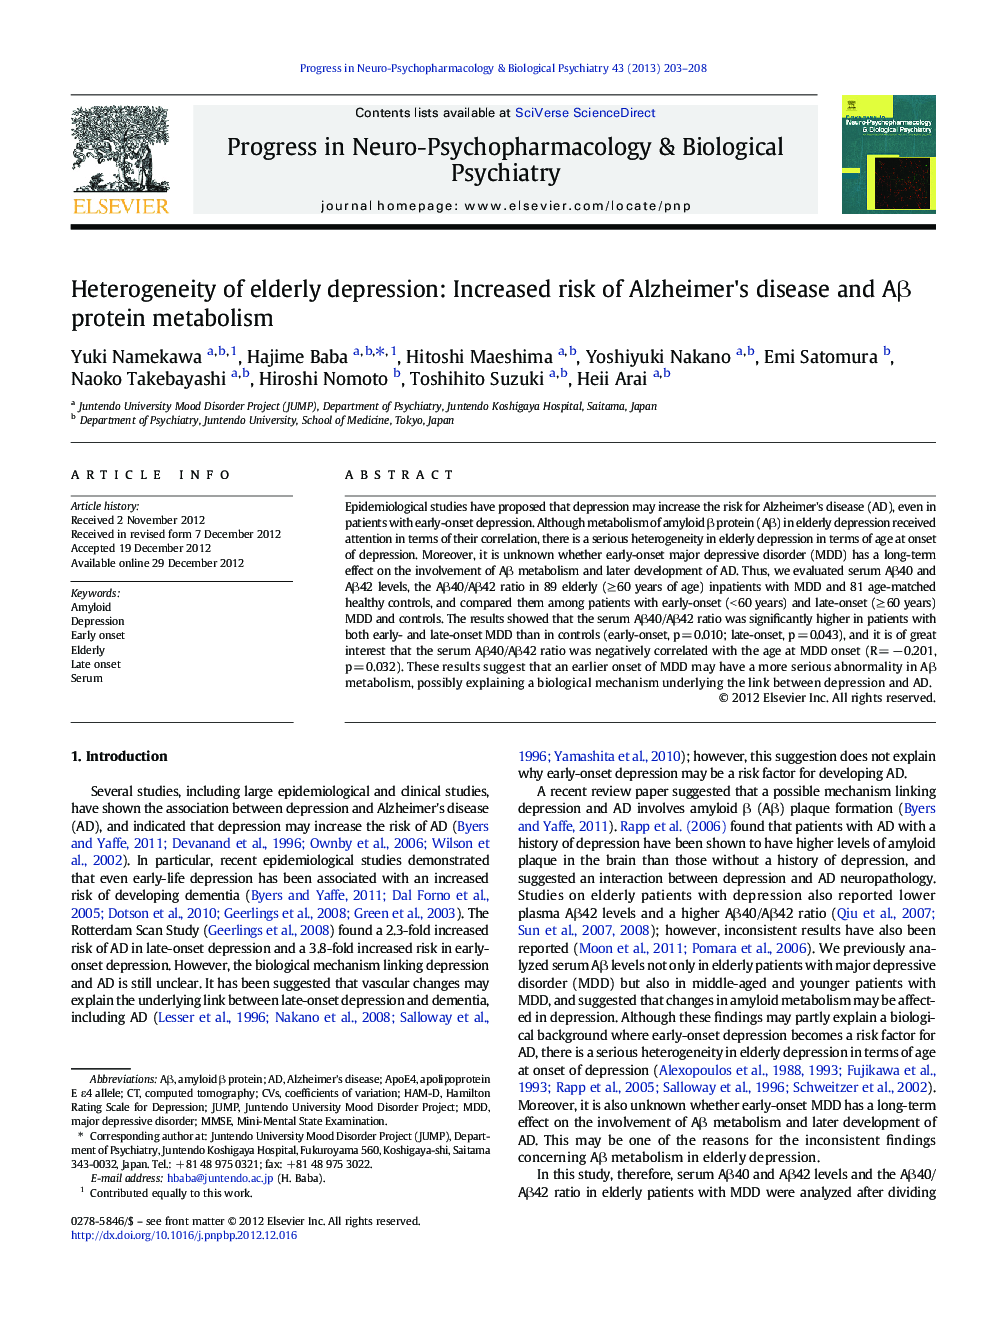 Heterogeneity of elderly depression: Increased risk of Alzheimer's disease and AÎ² protein metabolism